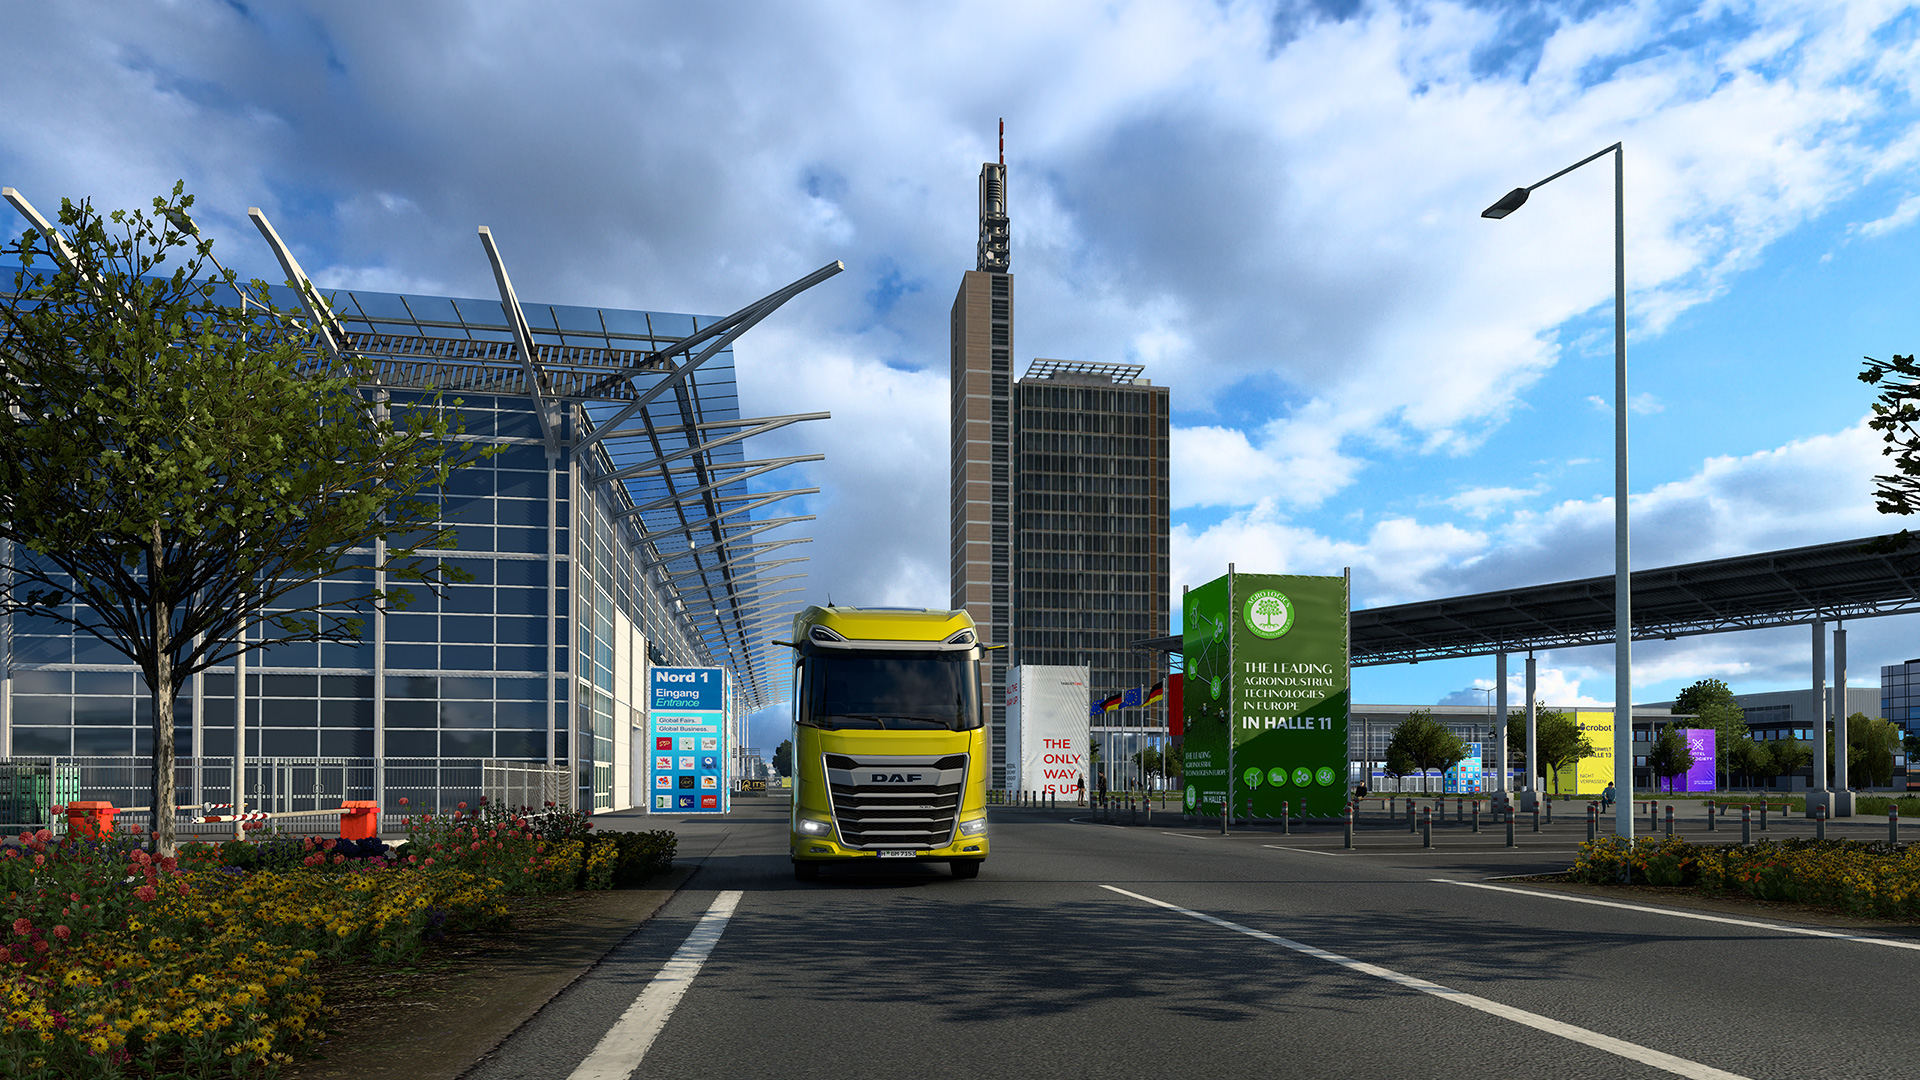 Euro Truck Simulator 2 bumps up to Update 1.45